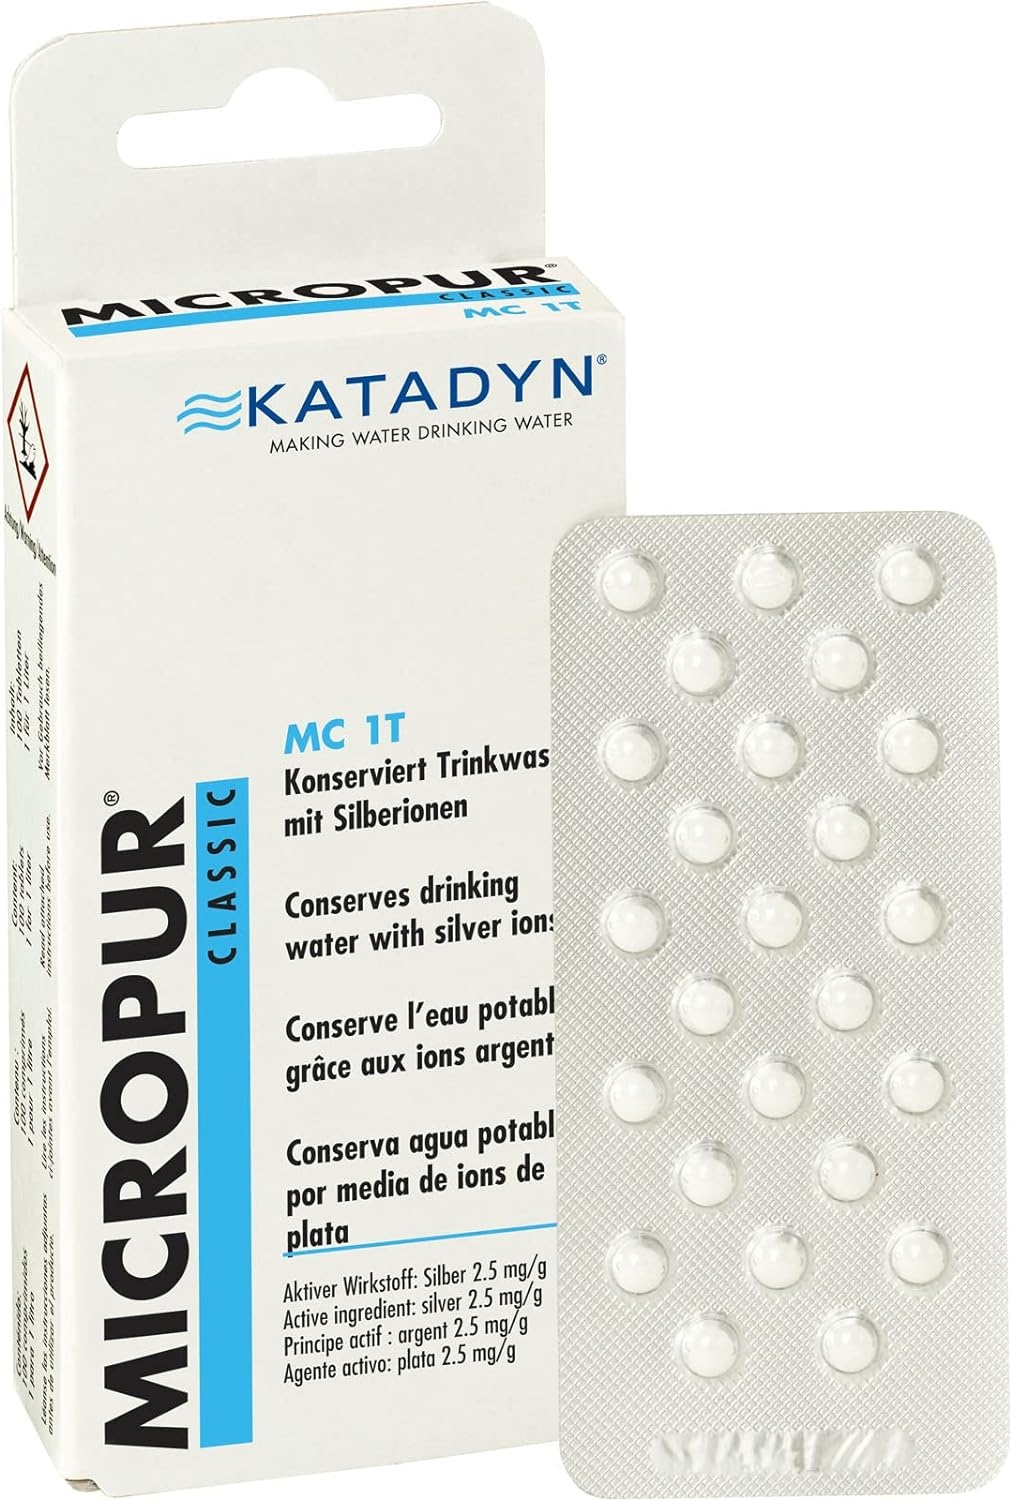 Katadyn Uzdatnianie wody Micropur Classic MC 1T - 100 tabletek